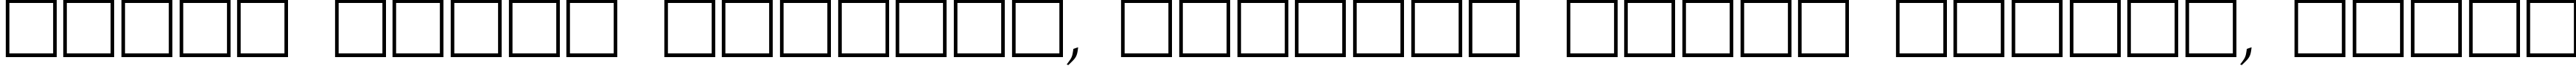 Пример написания шрифтом Zapf Chancery Italic:001.007 текста на белорусском